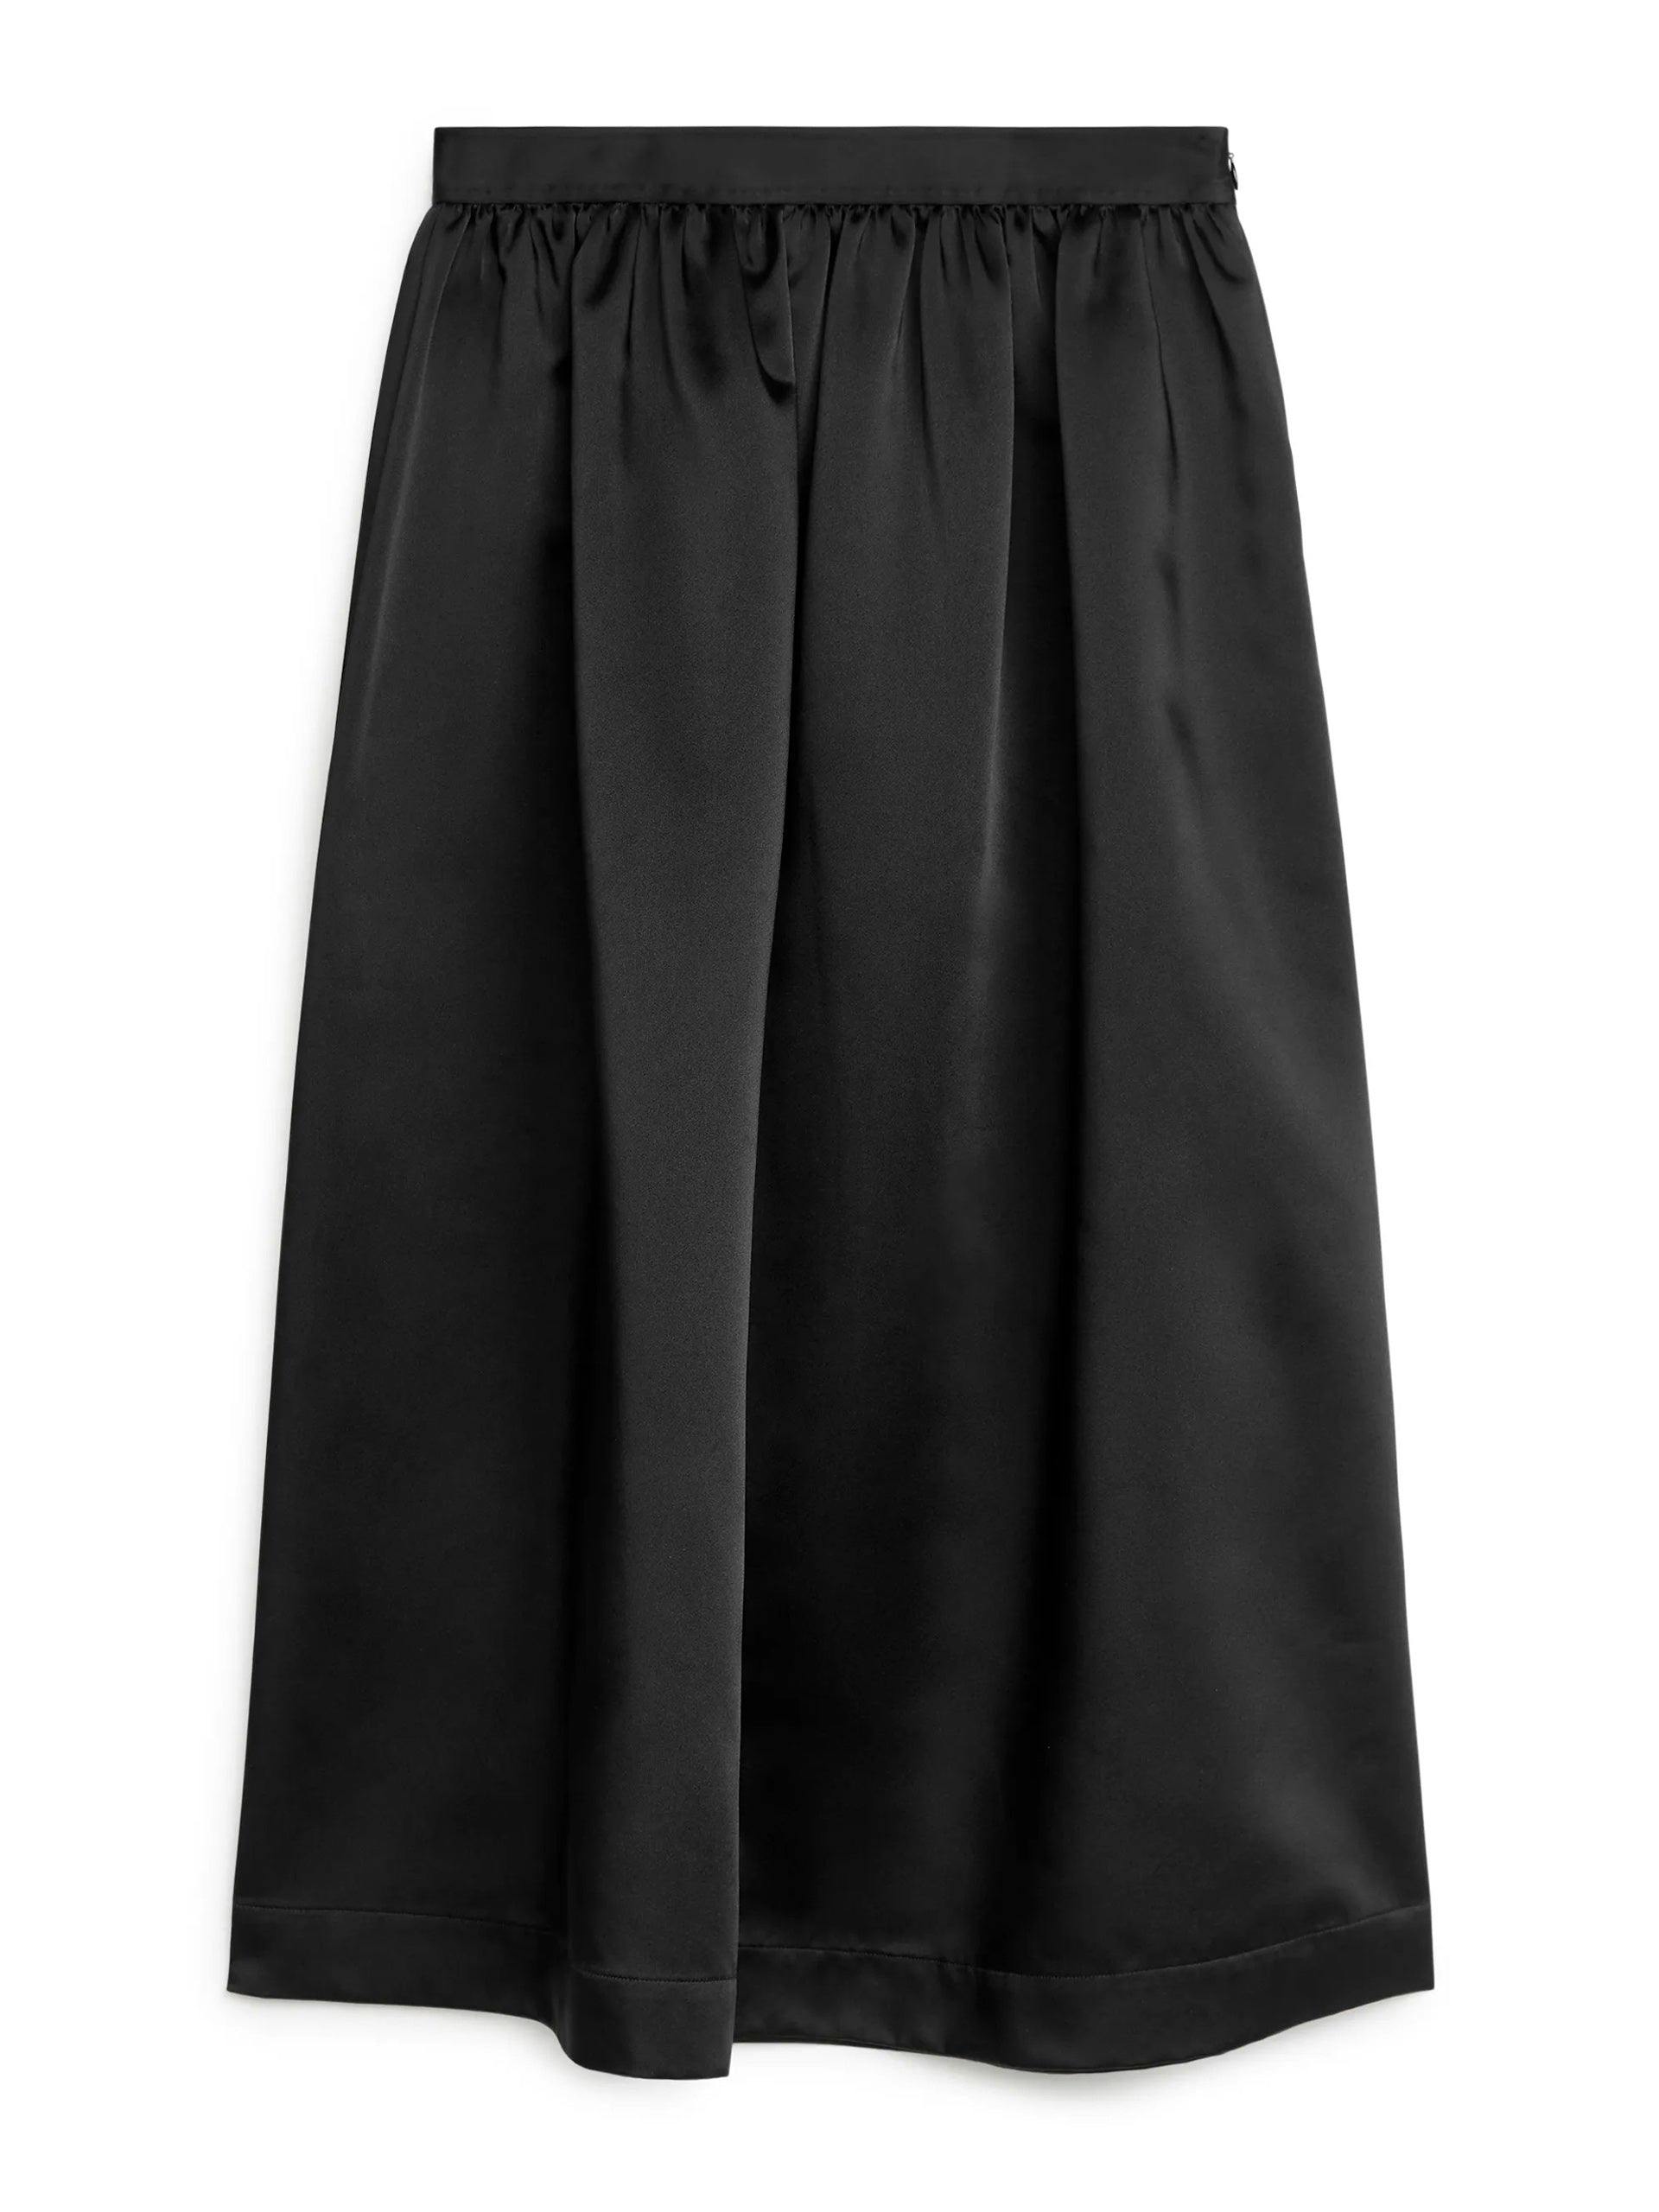 Black taffeta midi skirt